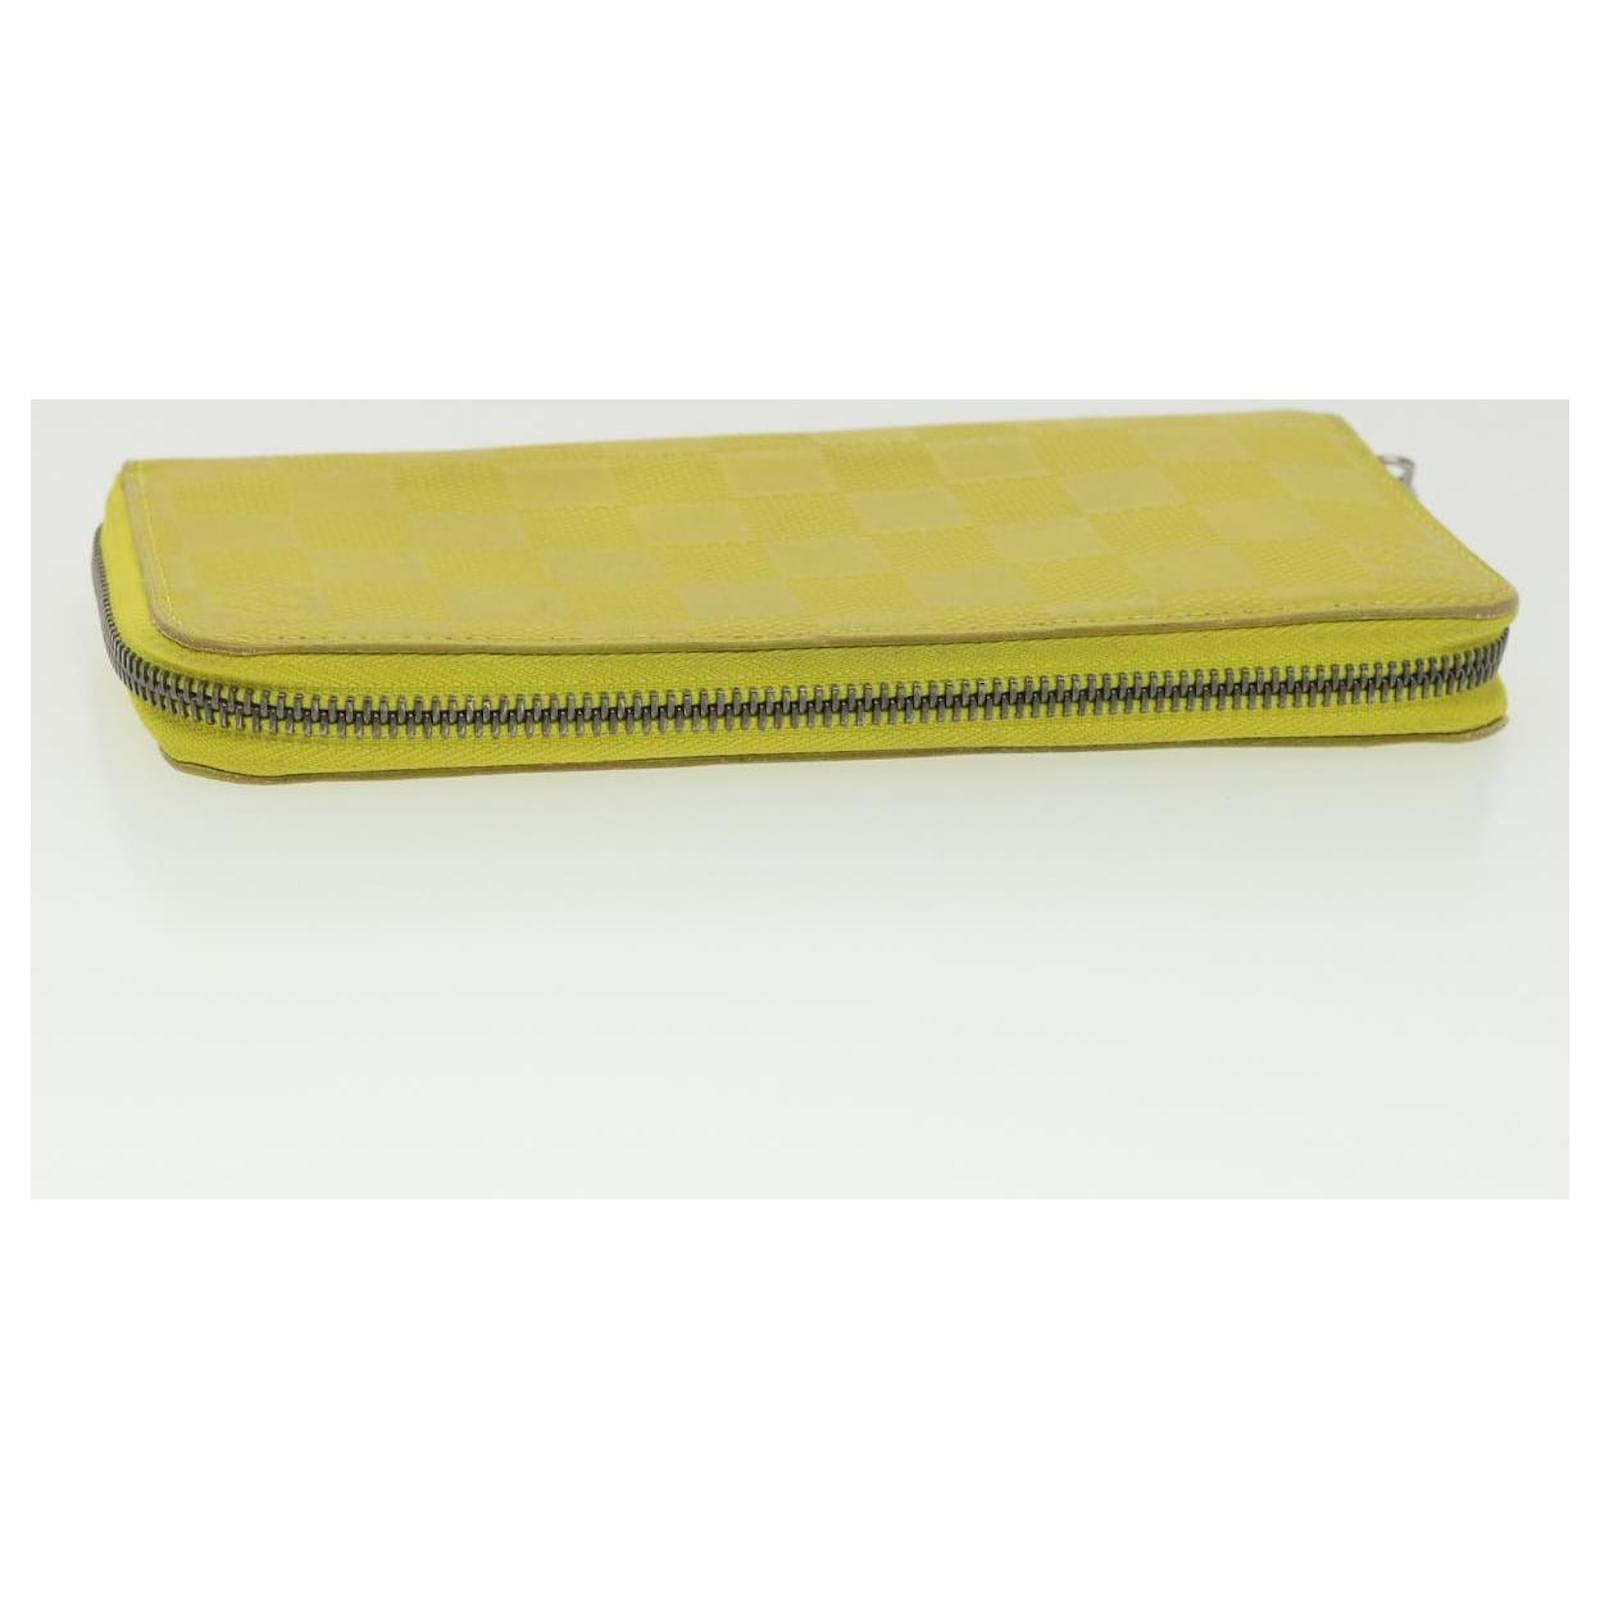 Louis Vuitton Zippy Vertical Wallet damier infini yellow leather